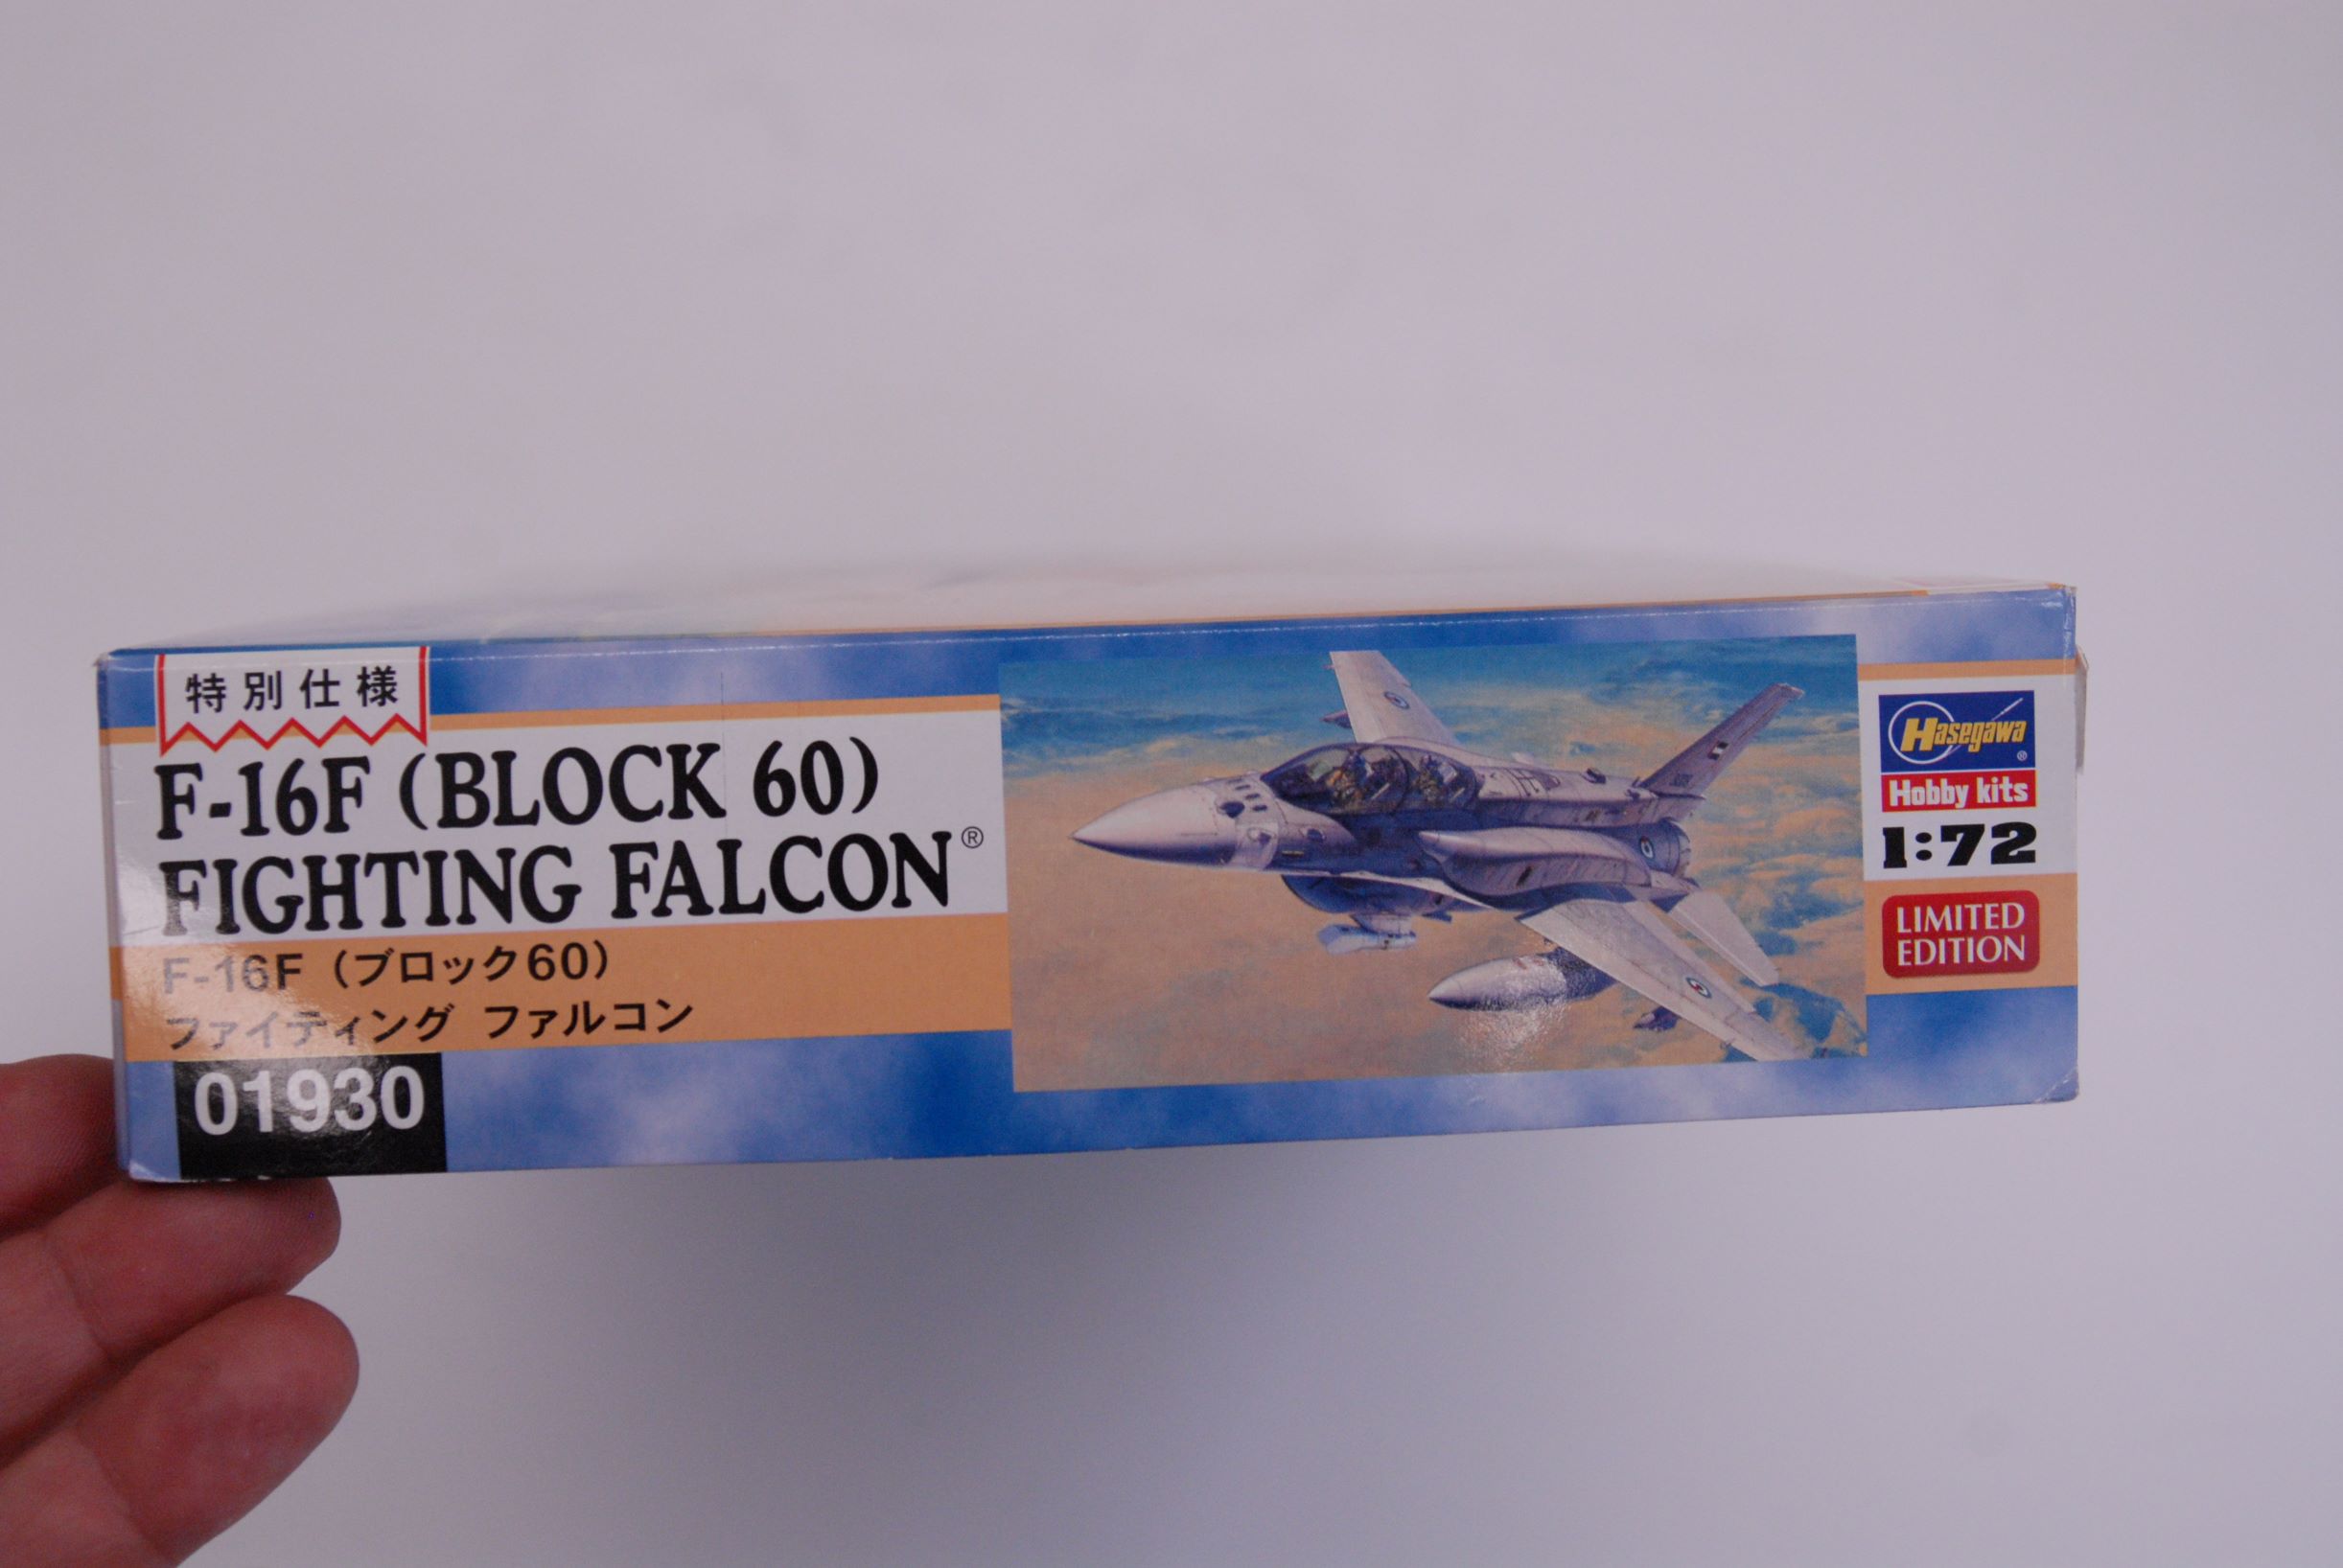 F-16F (block 60) fighting falcon